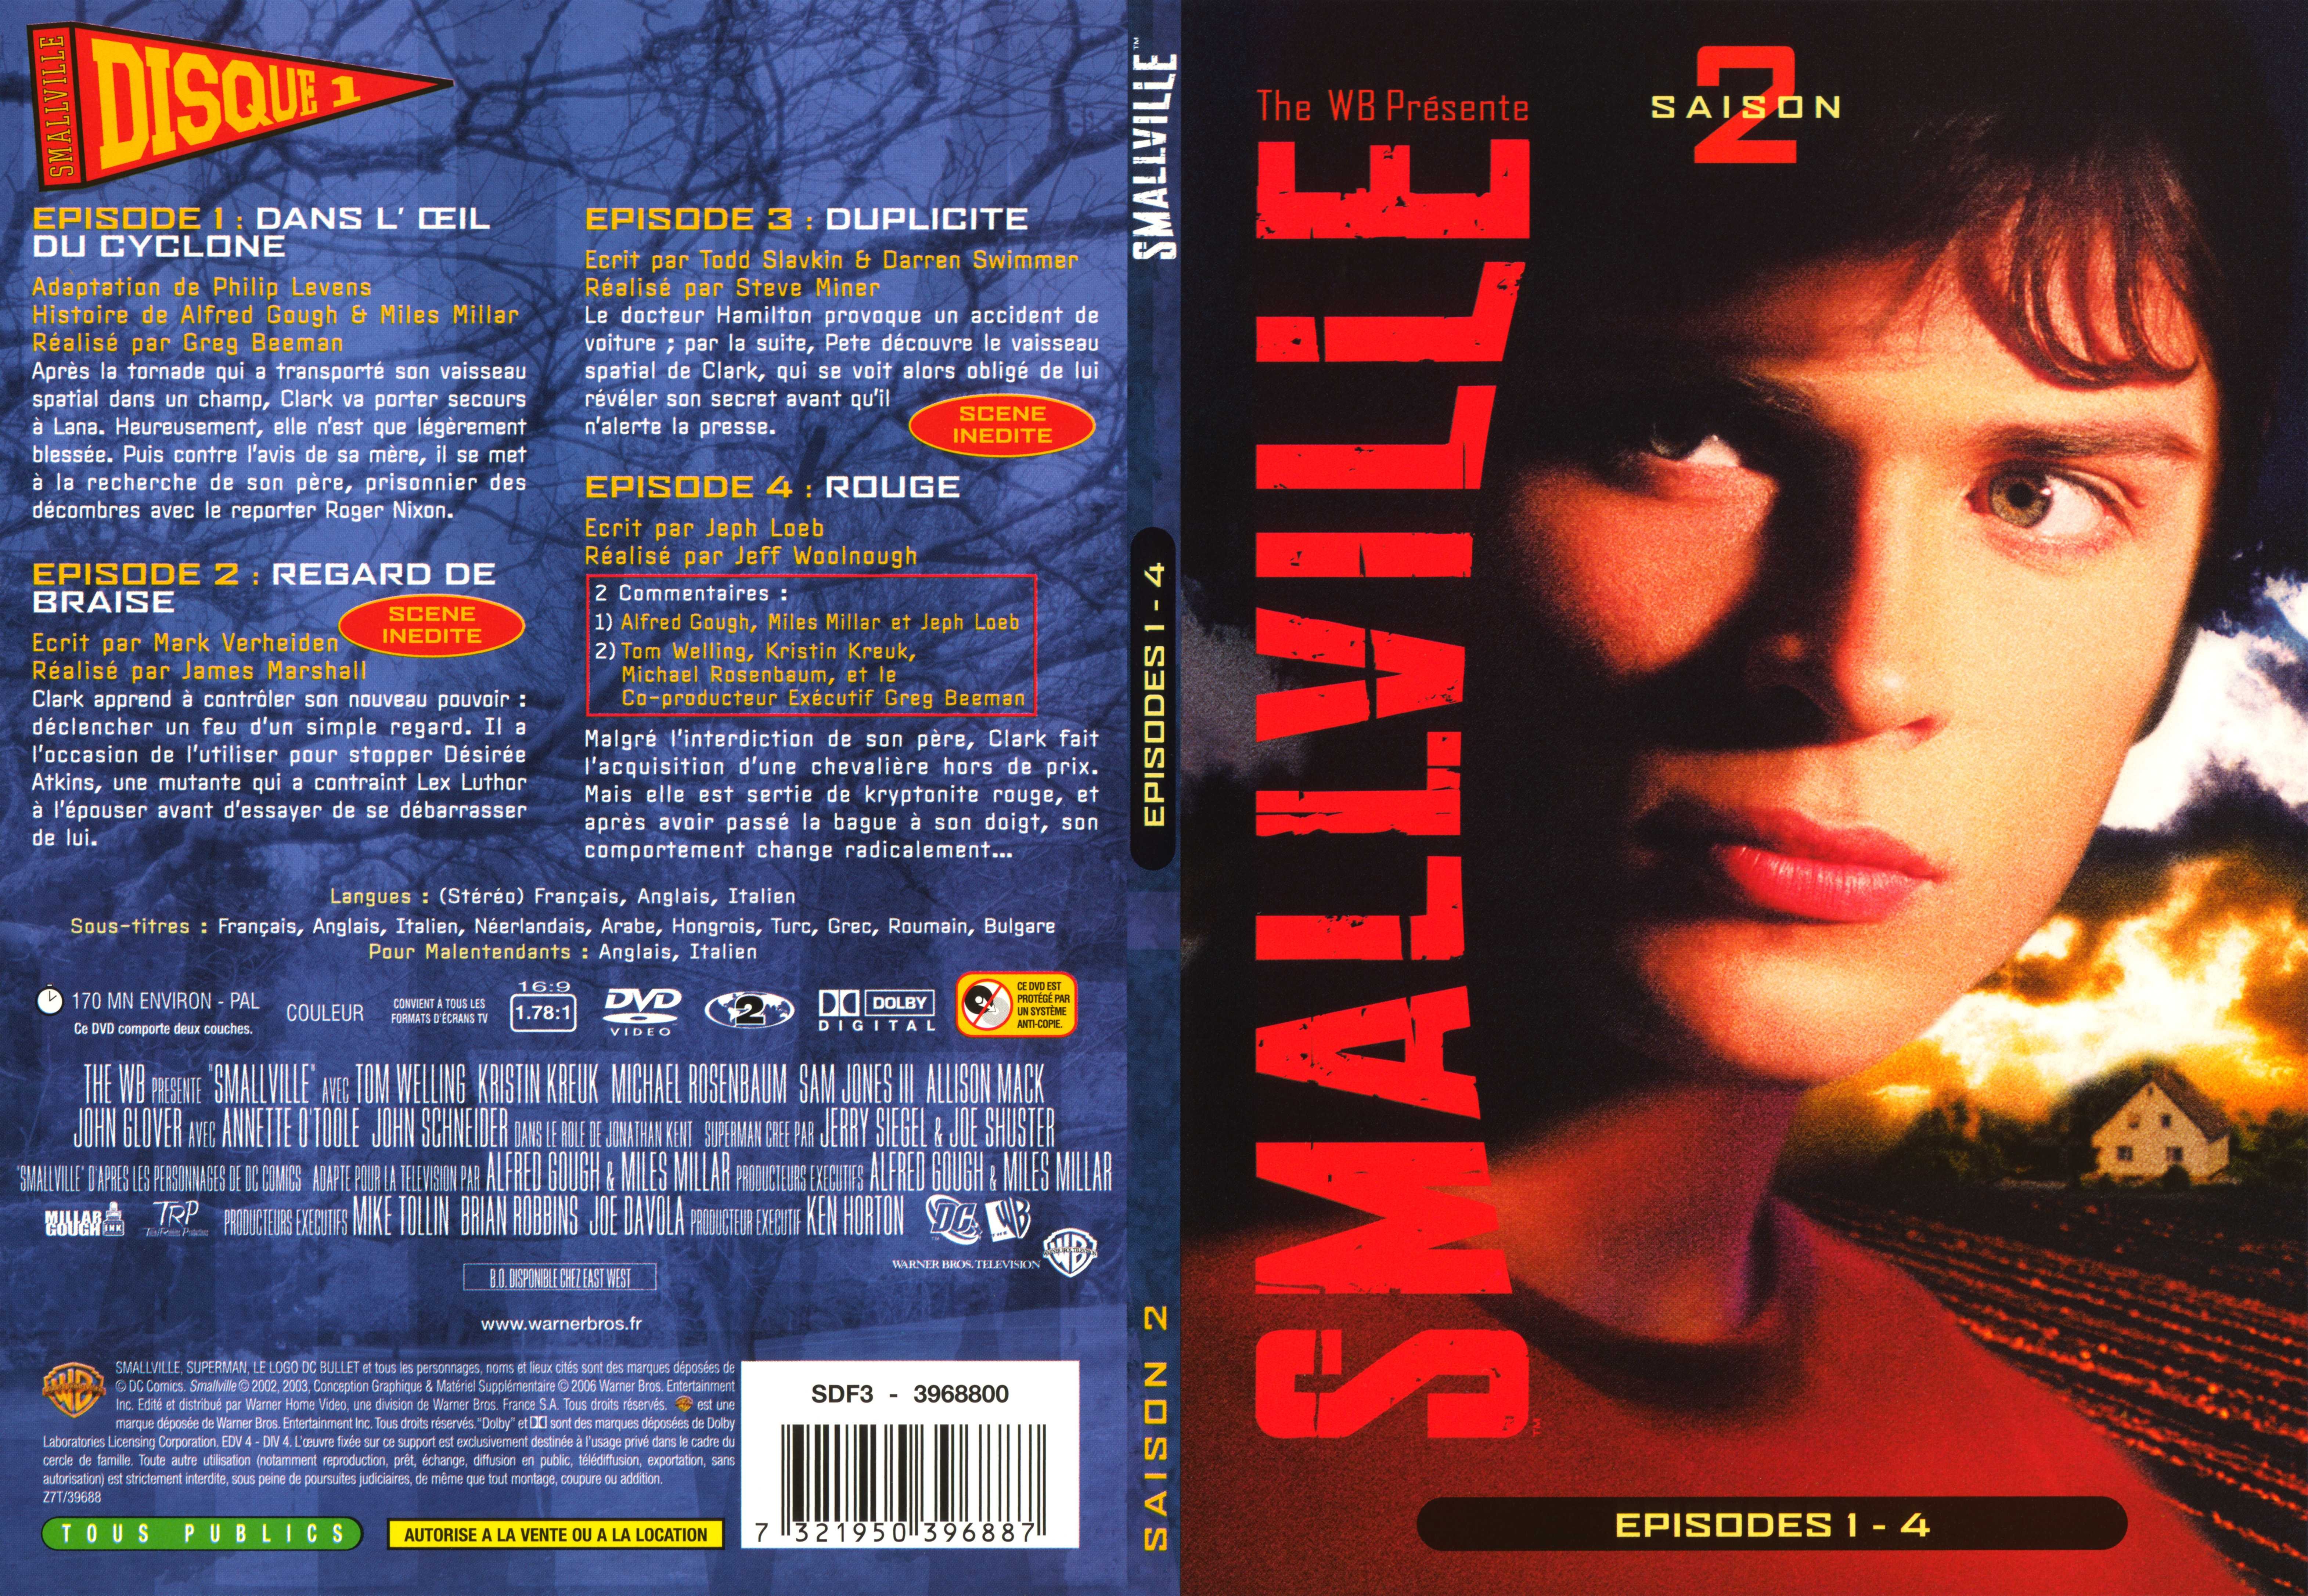 Jaquette DVD Smallville saison 2 DVD 1